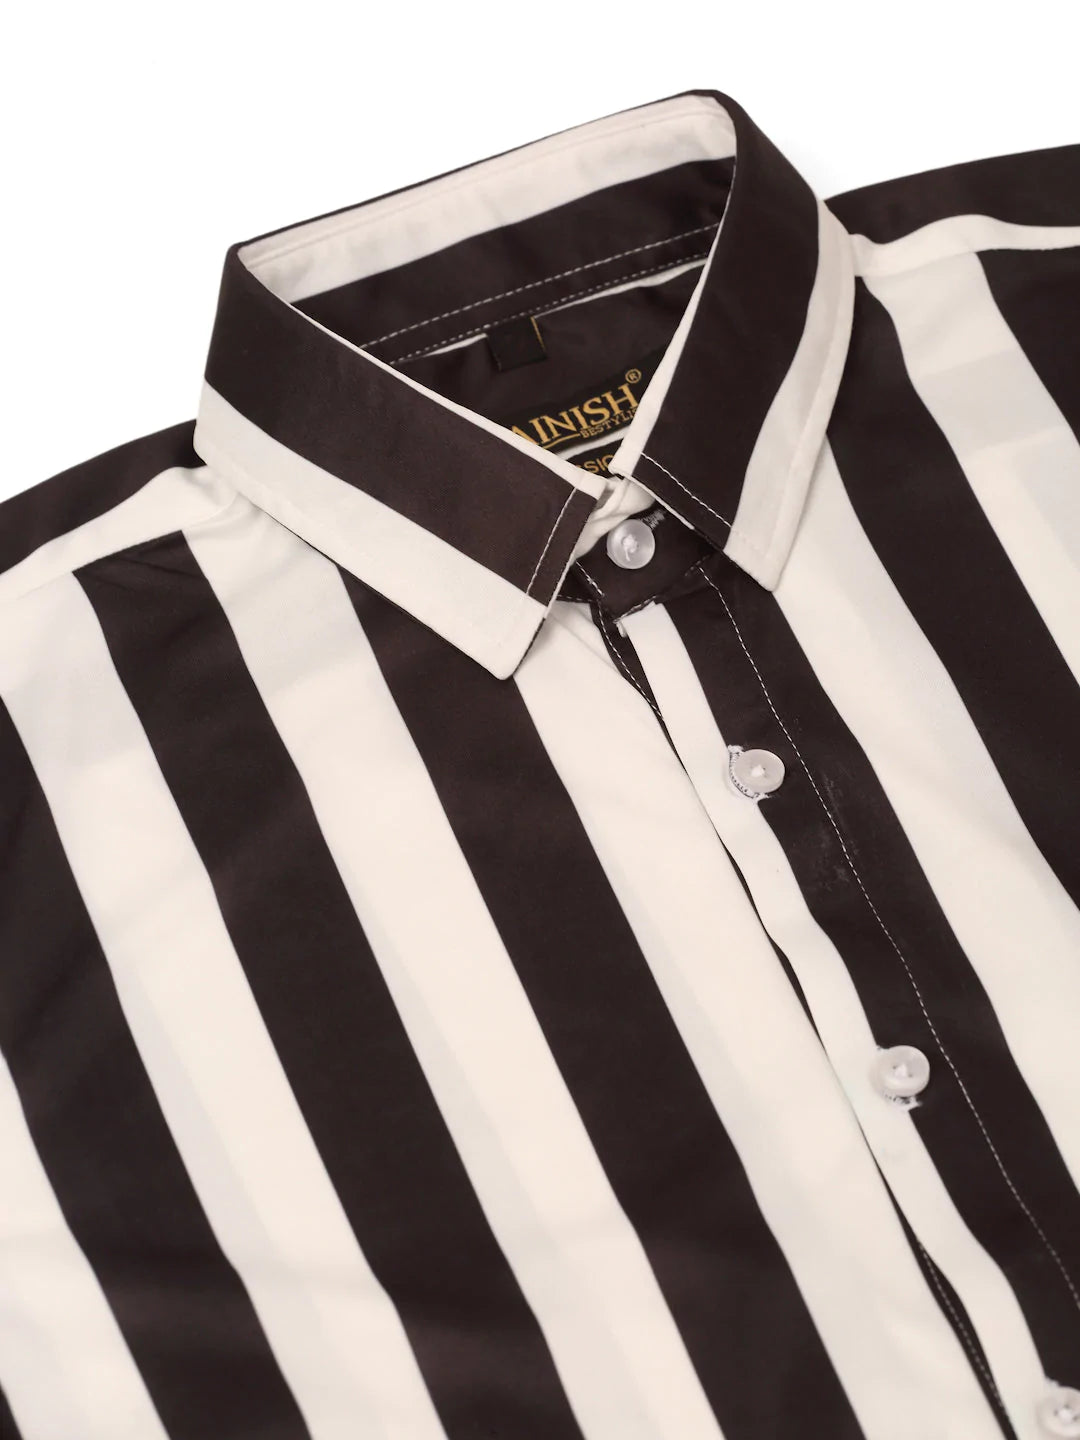 Jainish Men's Lycra Striped Half Sleeve Formal Shirts ( SF 812White )